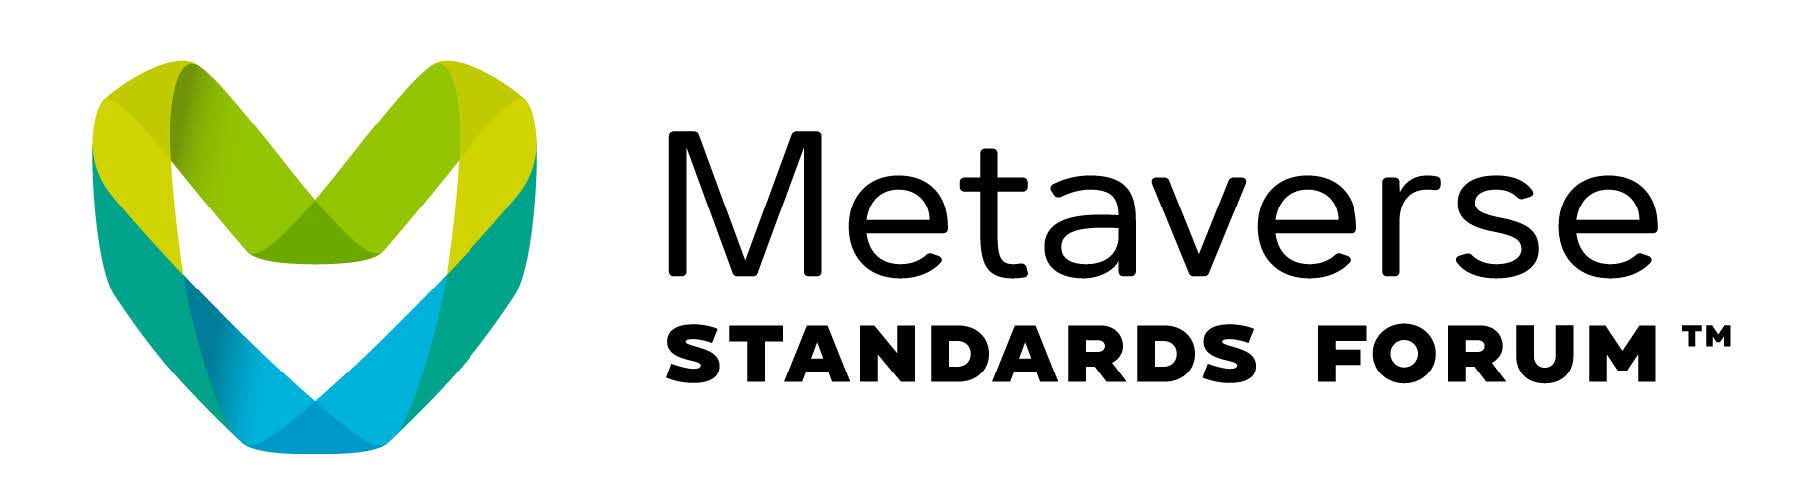 Metaverse Standards Forum ™